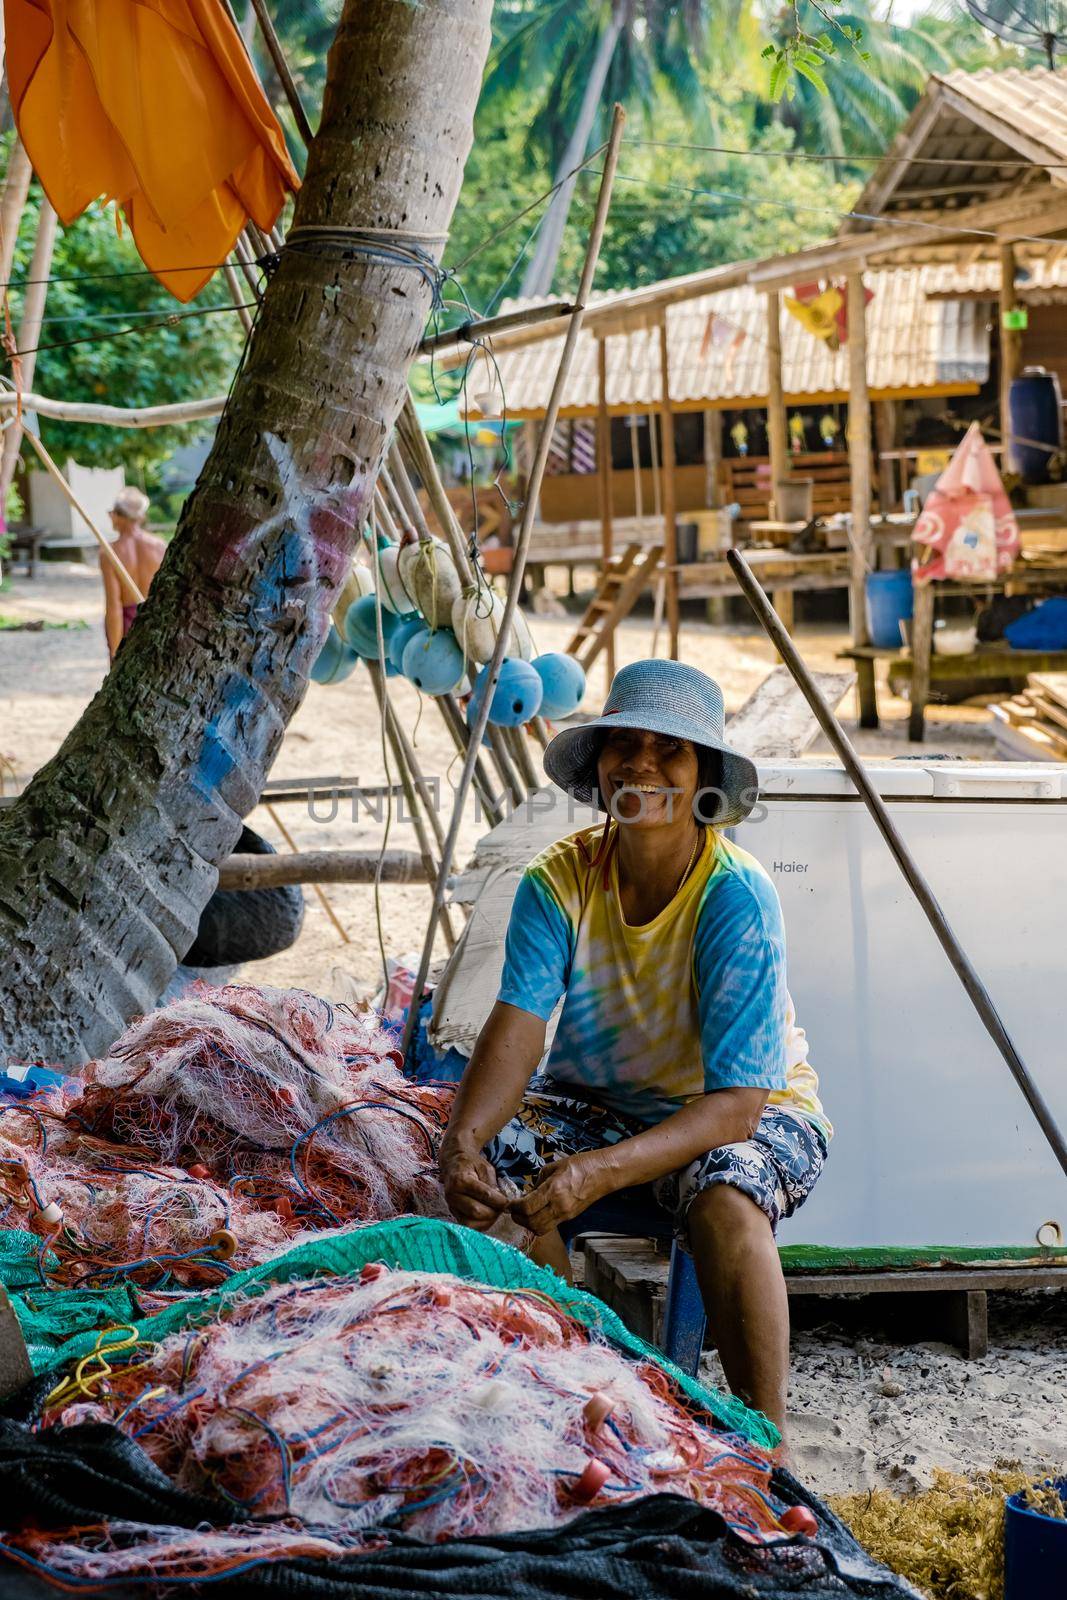 Koh Phitak , Chumphon province Thailand January 2020, fishing boats and small huts above the water, Koh Phitak a tradiional fishing village in Thailand by fokkebok